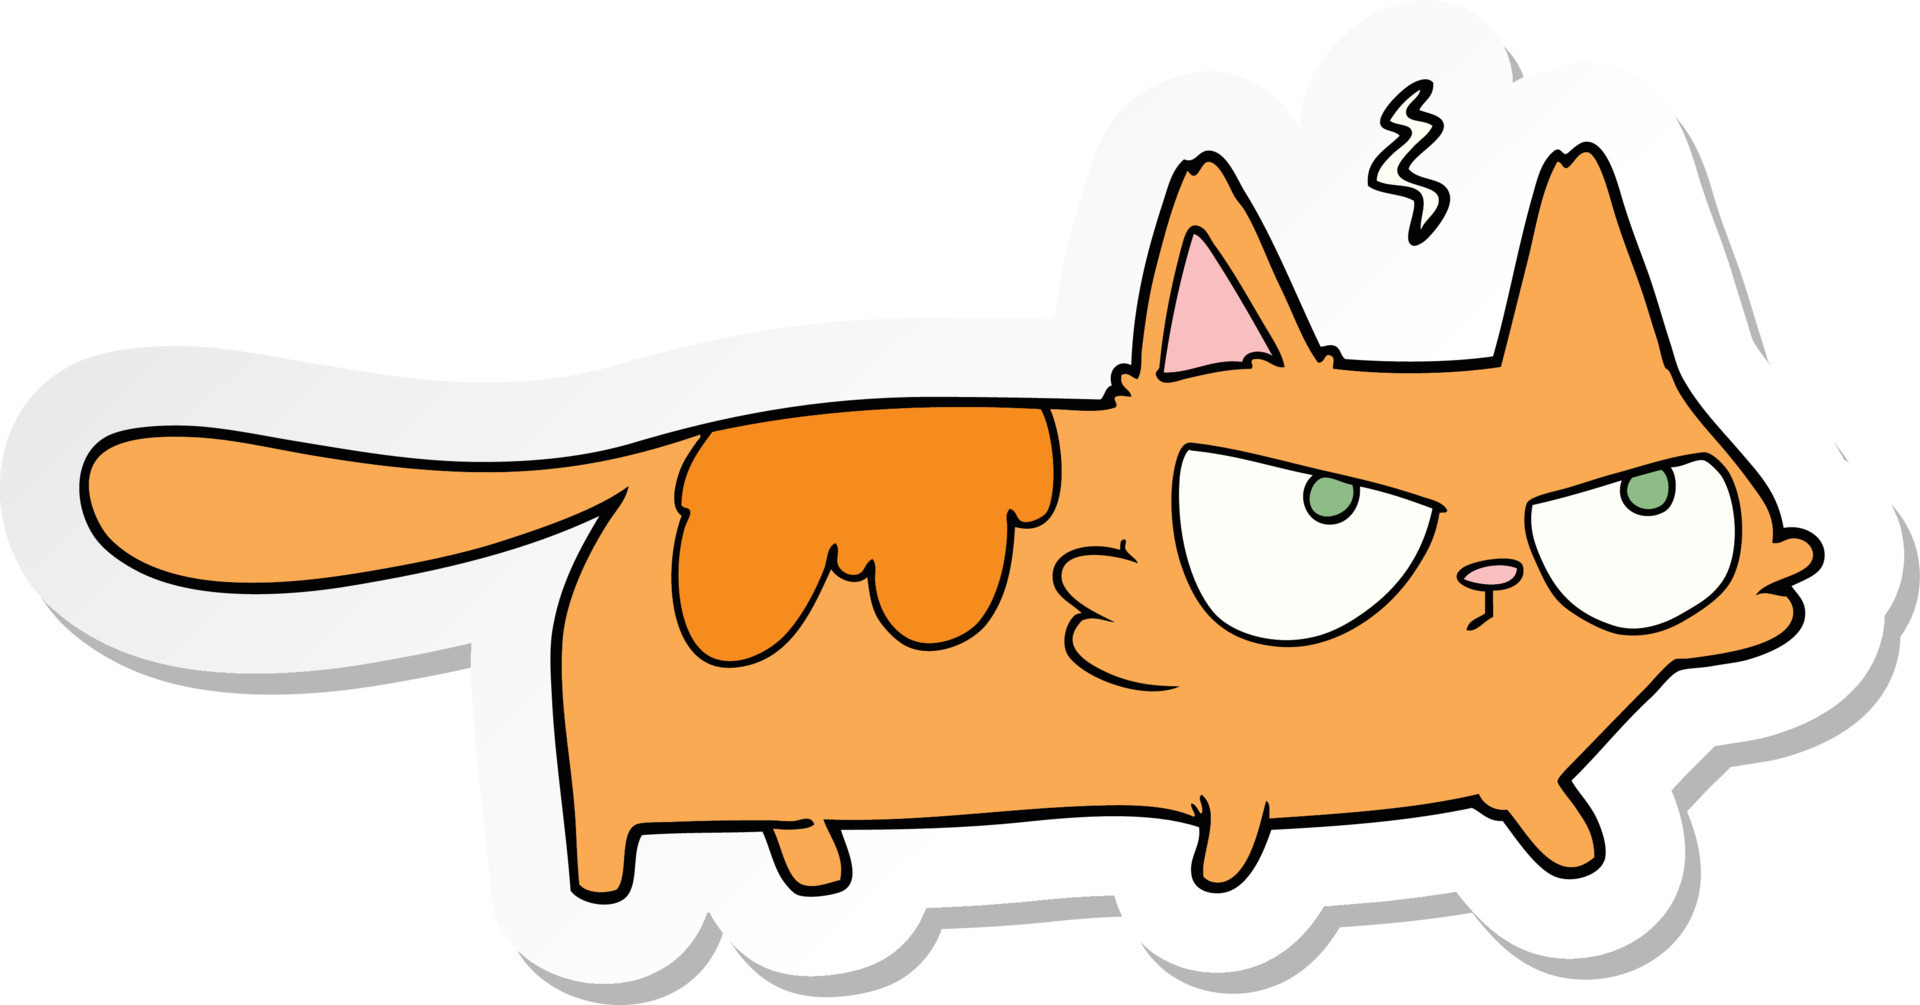 sticker-of-a-cartoon-angry-cat-vector.jpg